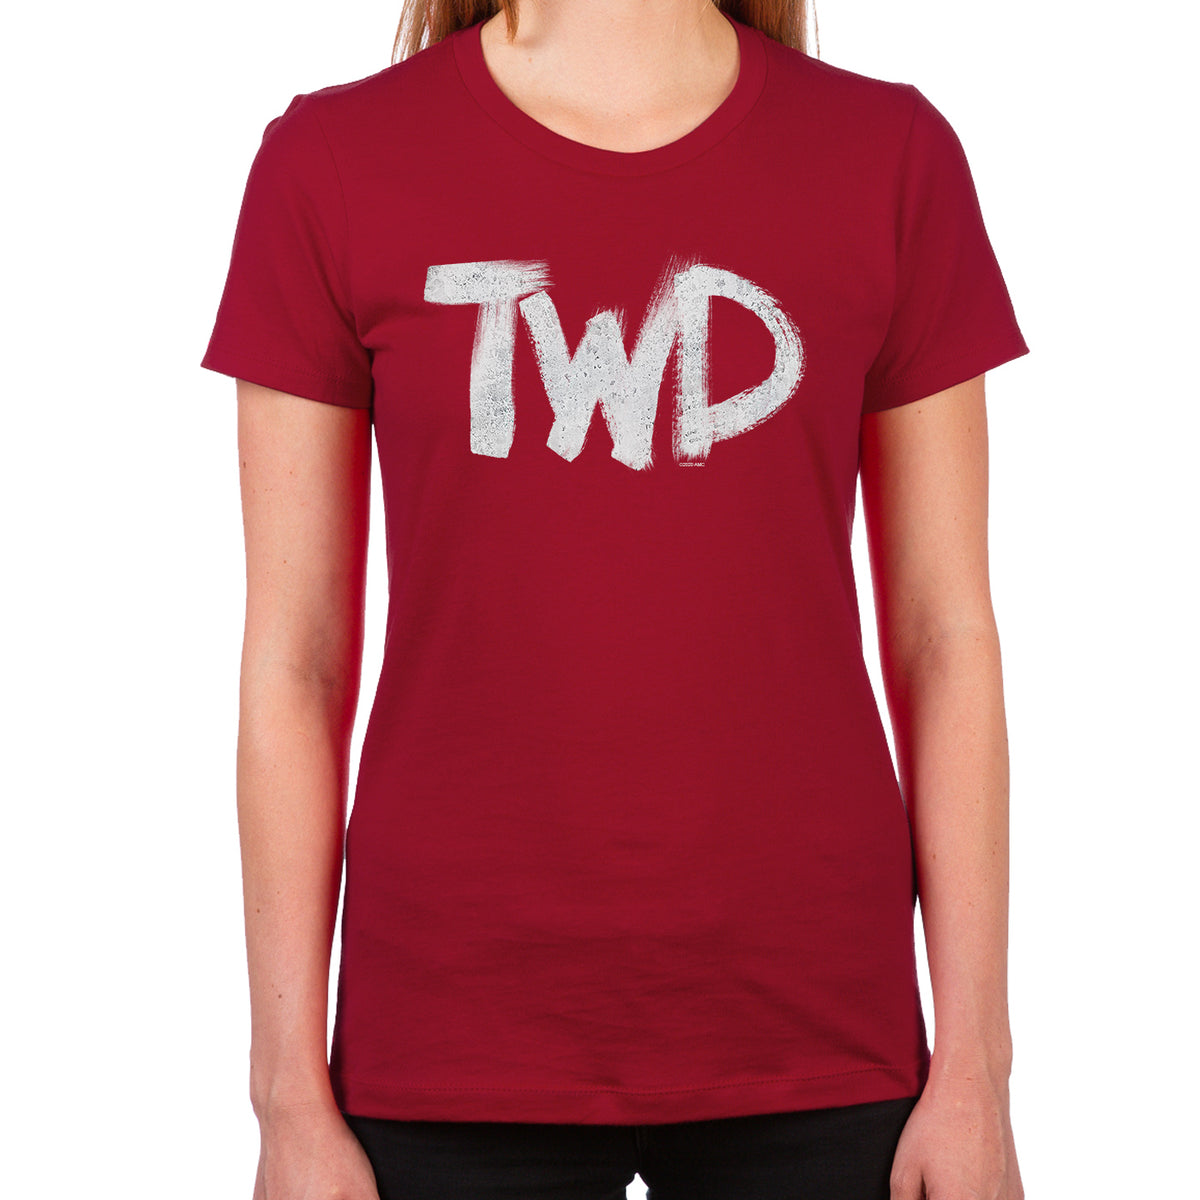 TWD Paint Logo Women's T-Shirt